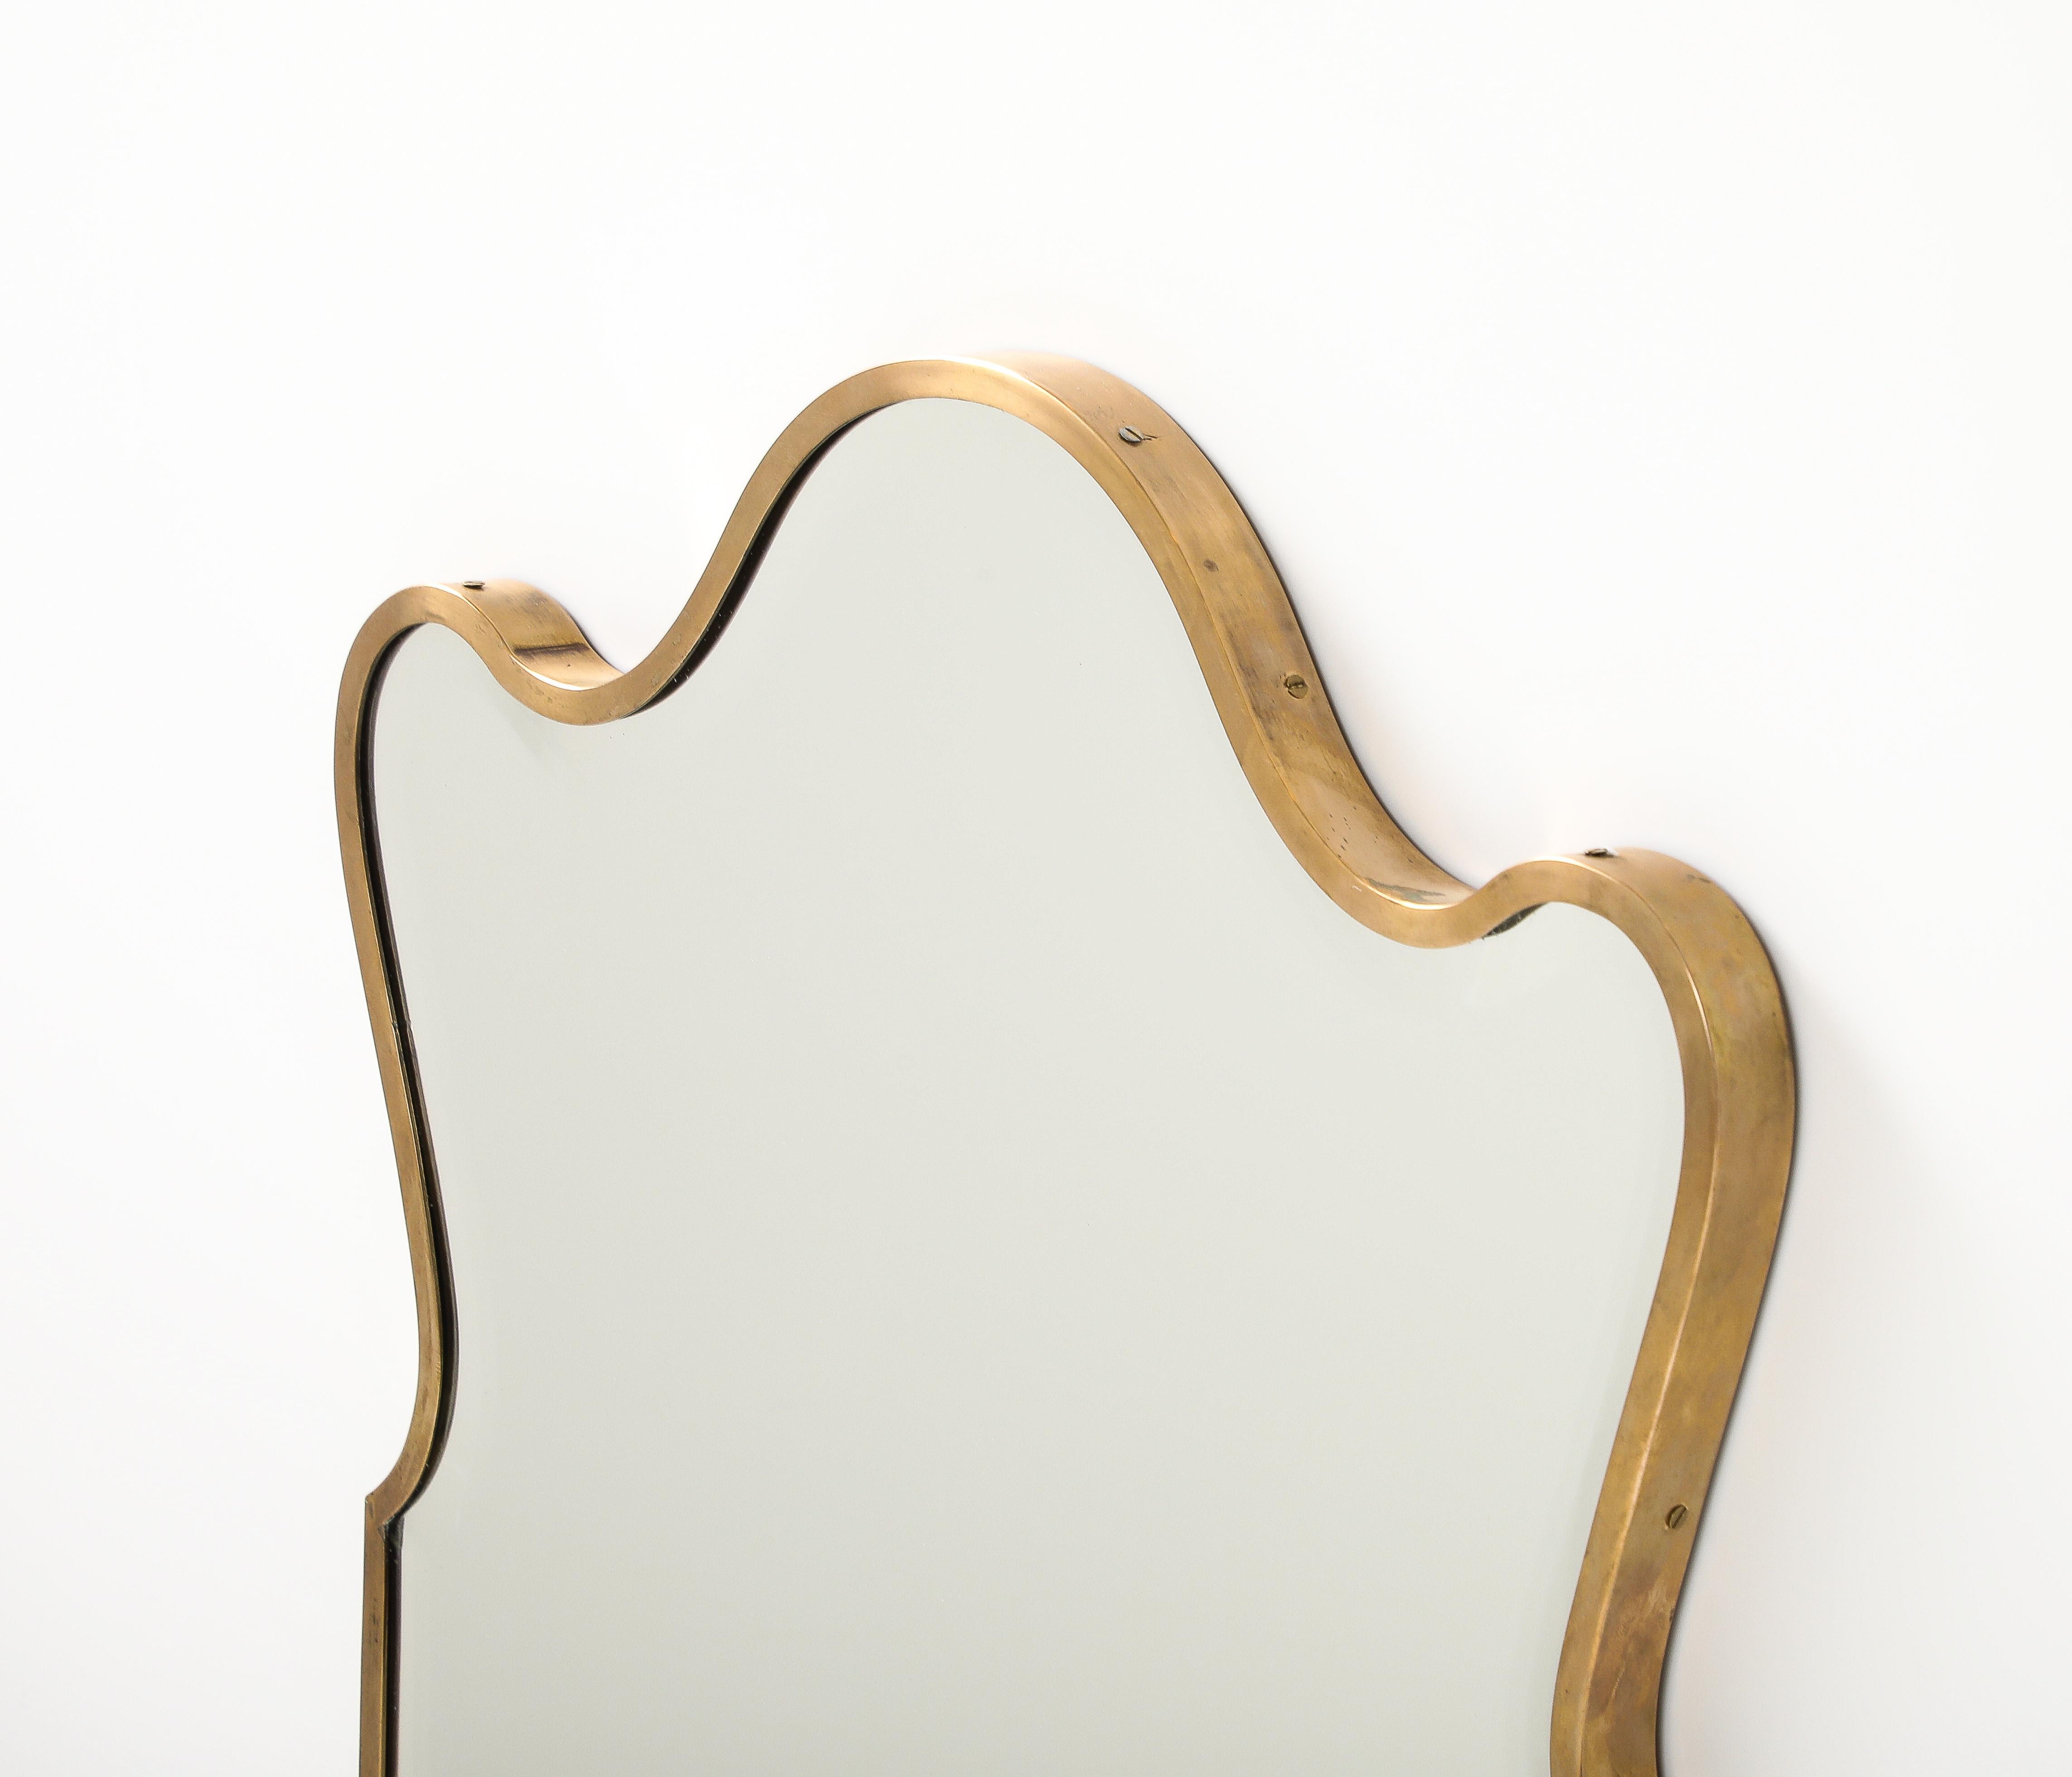 Mid-20th Century Italian Mid Century Modern Mirror, Brass Frame and Bevelled Edge, 1950’s